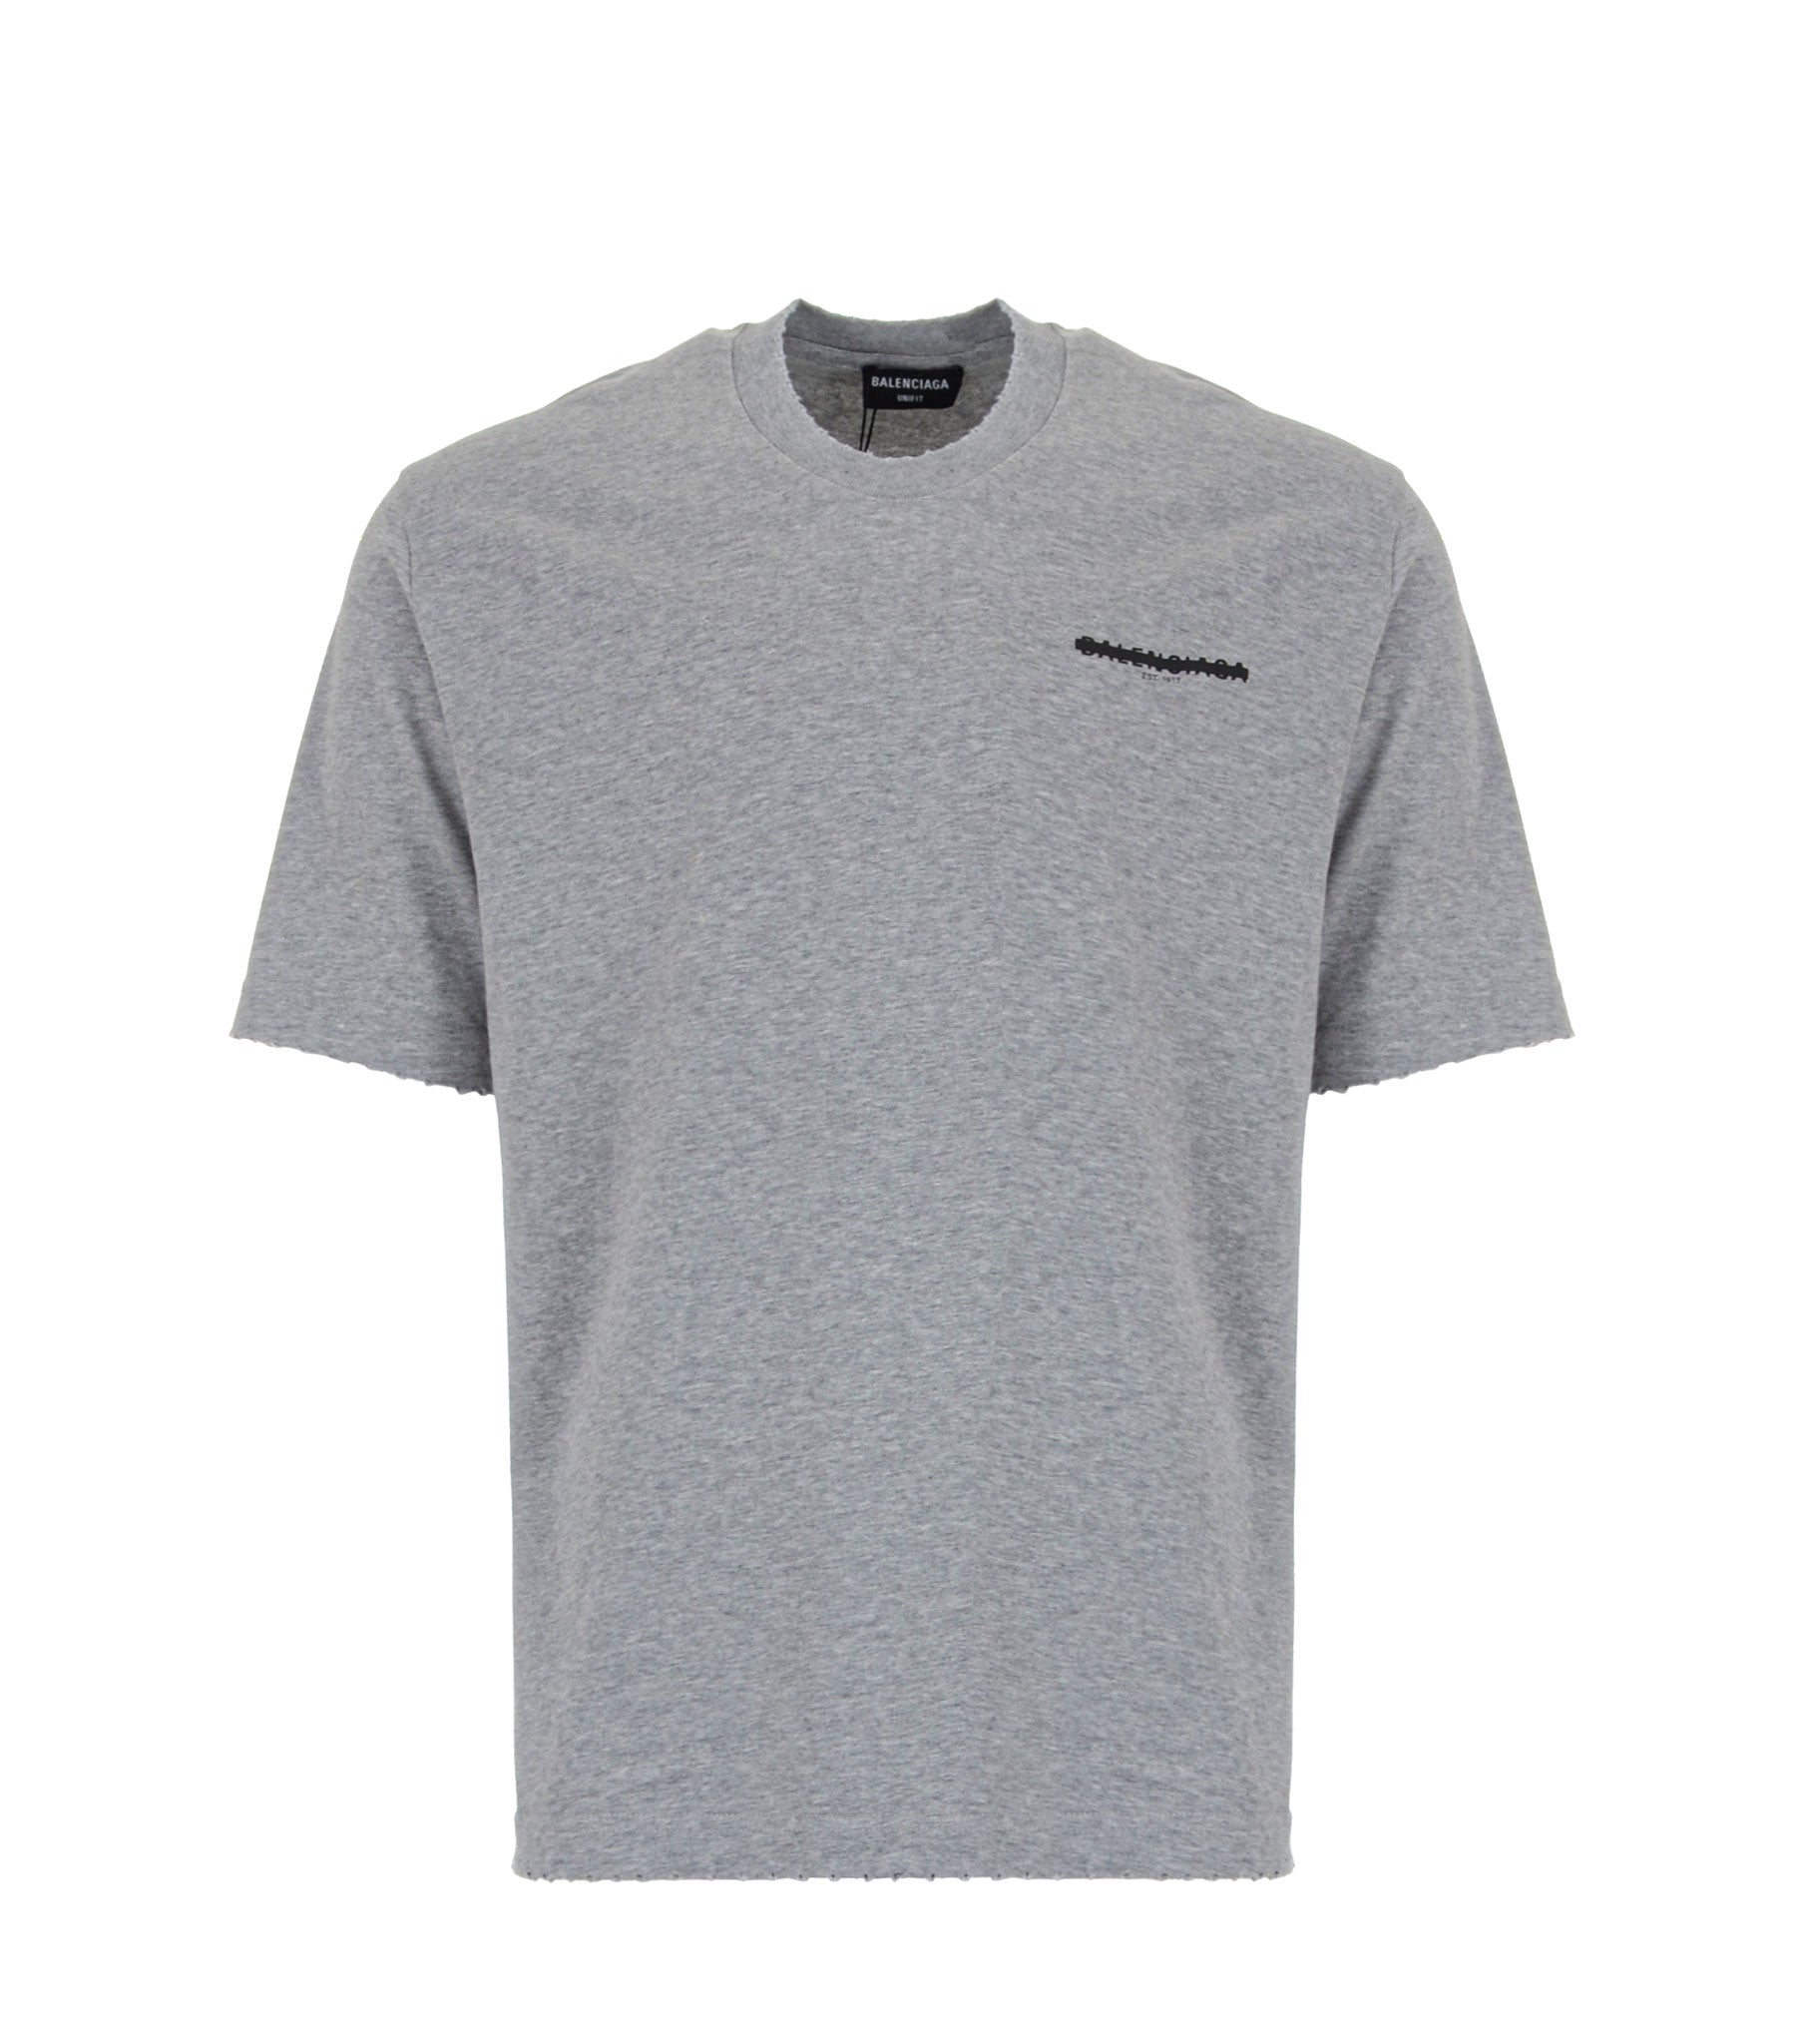 Grey Cotton T-shirt